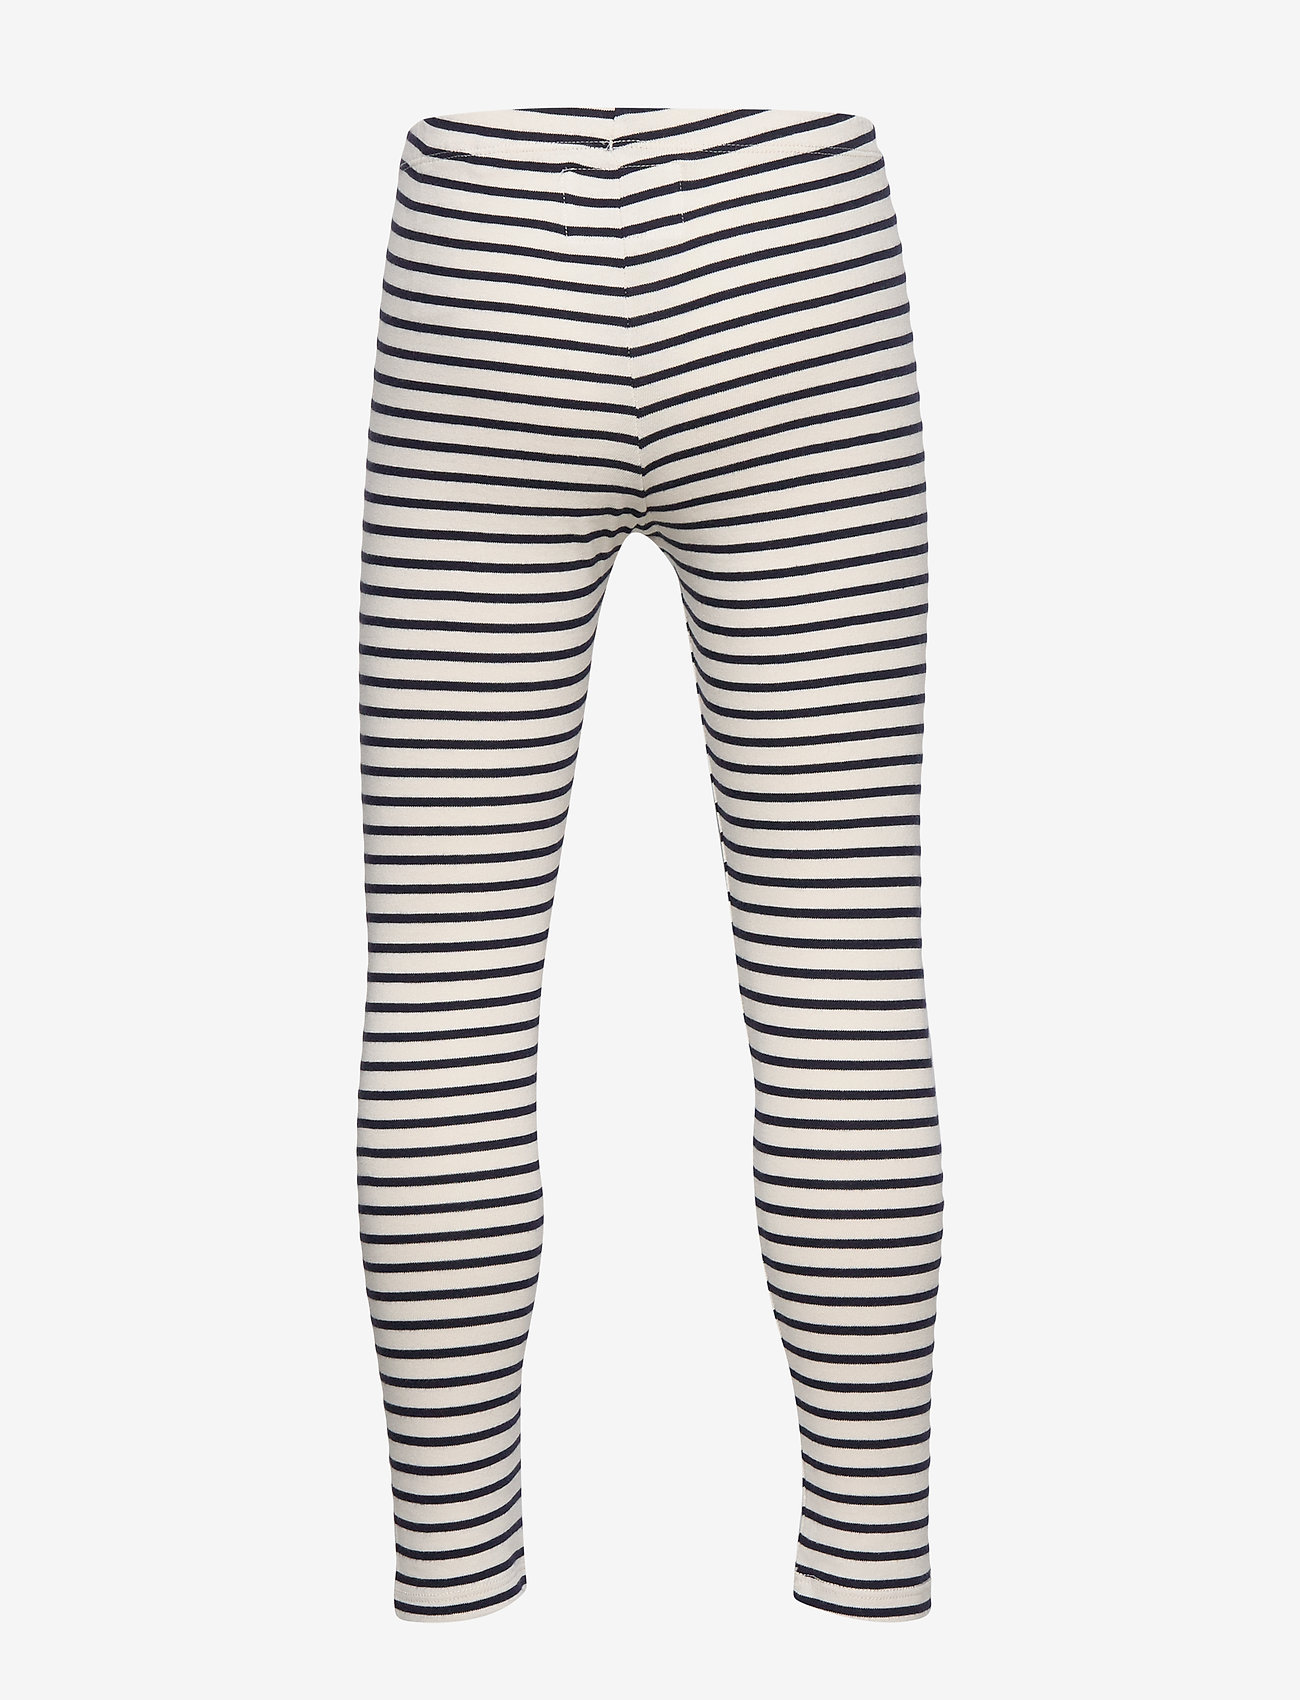 Wood Wood - Ira kids leggings - leginsy - off-white/navy stripes - 1